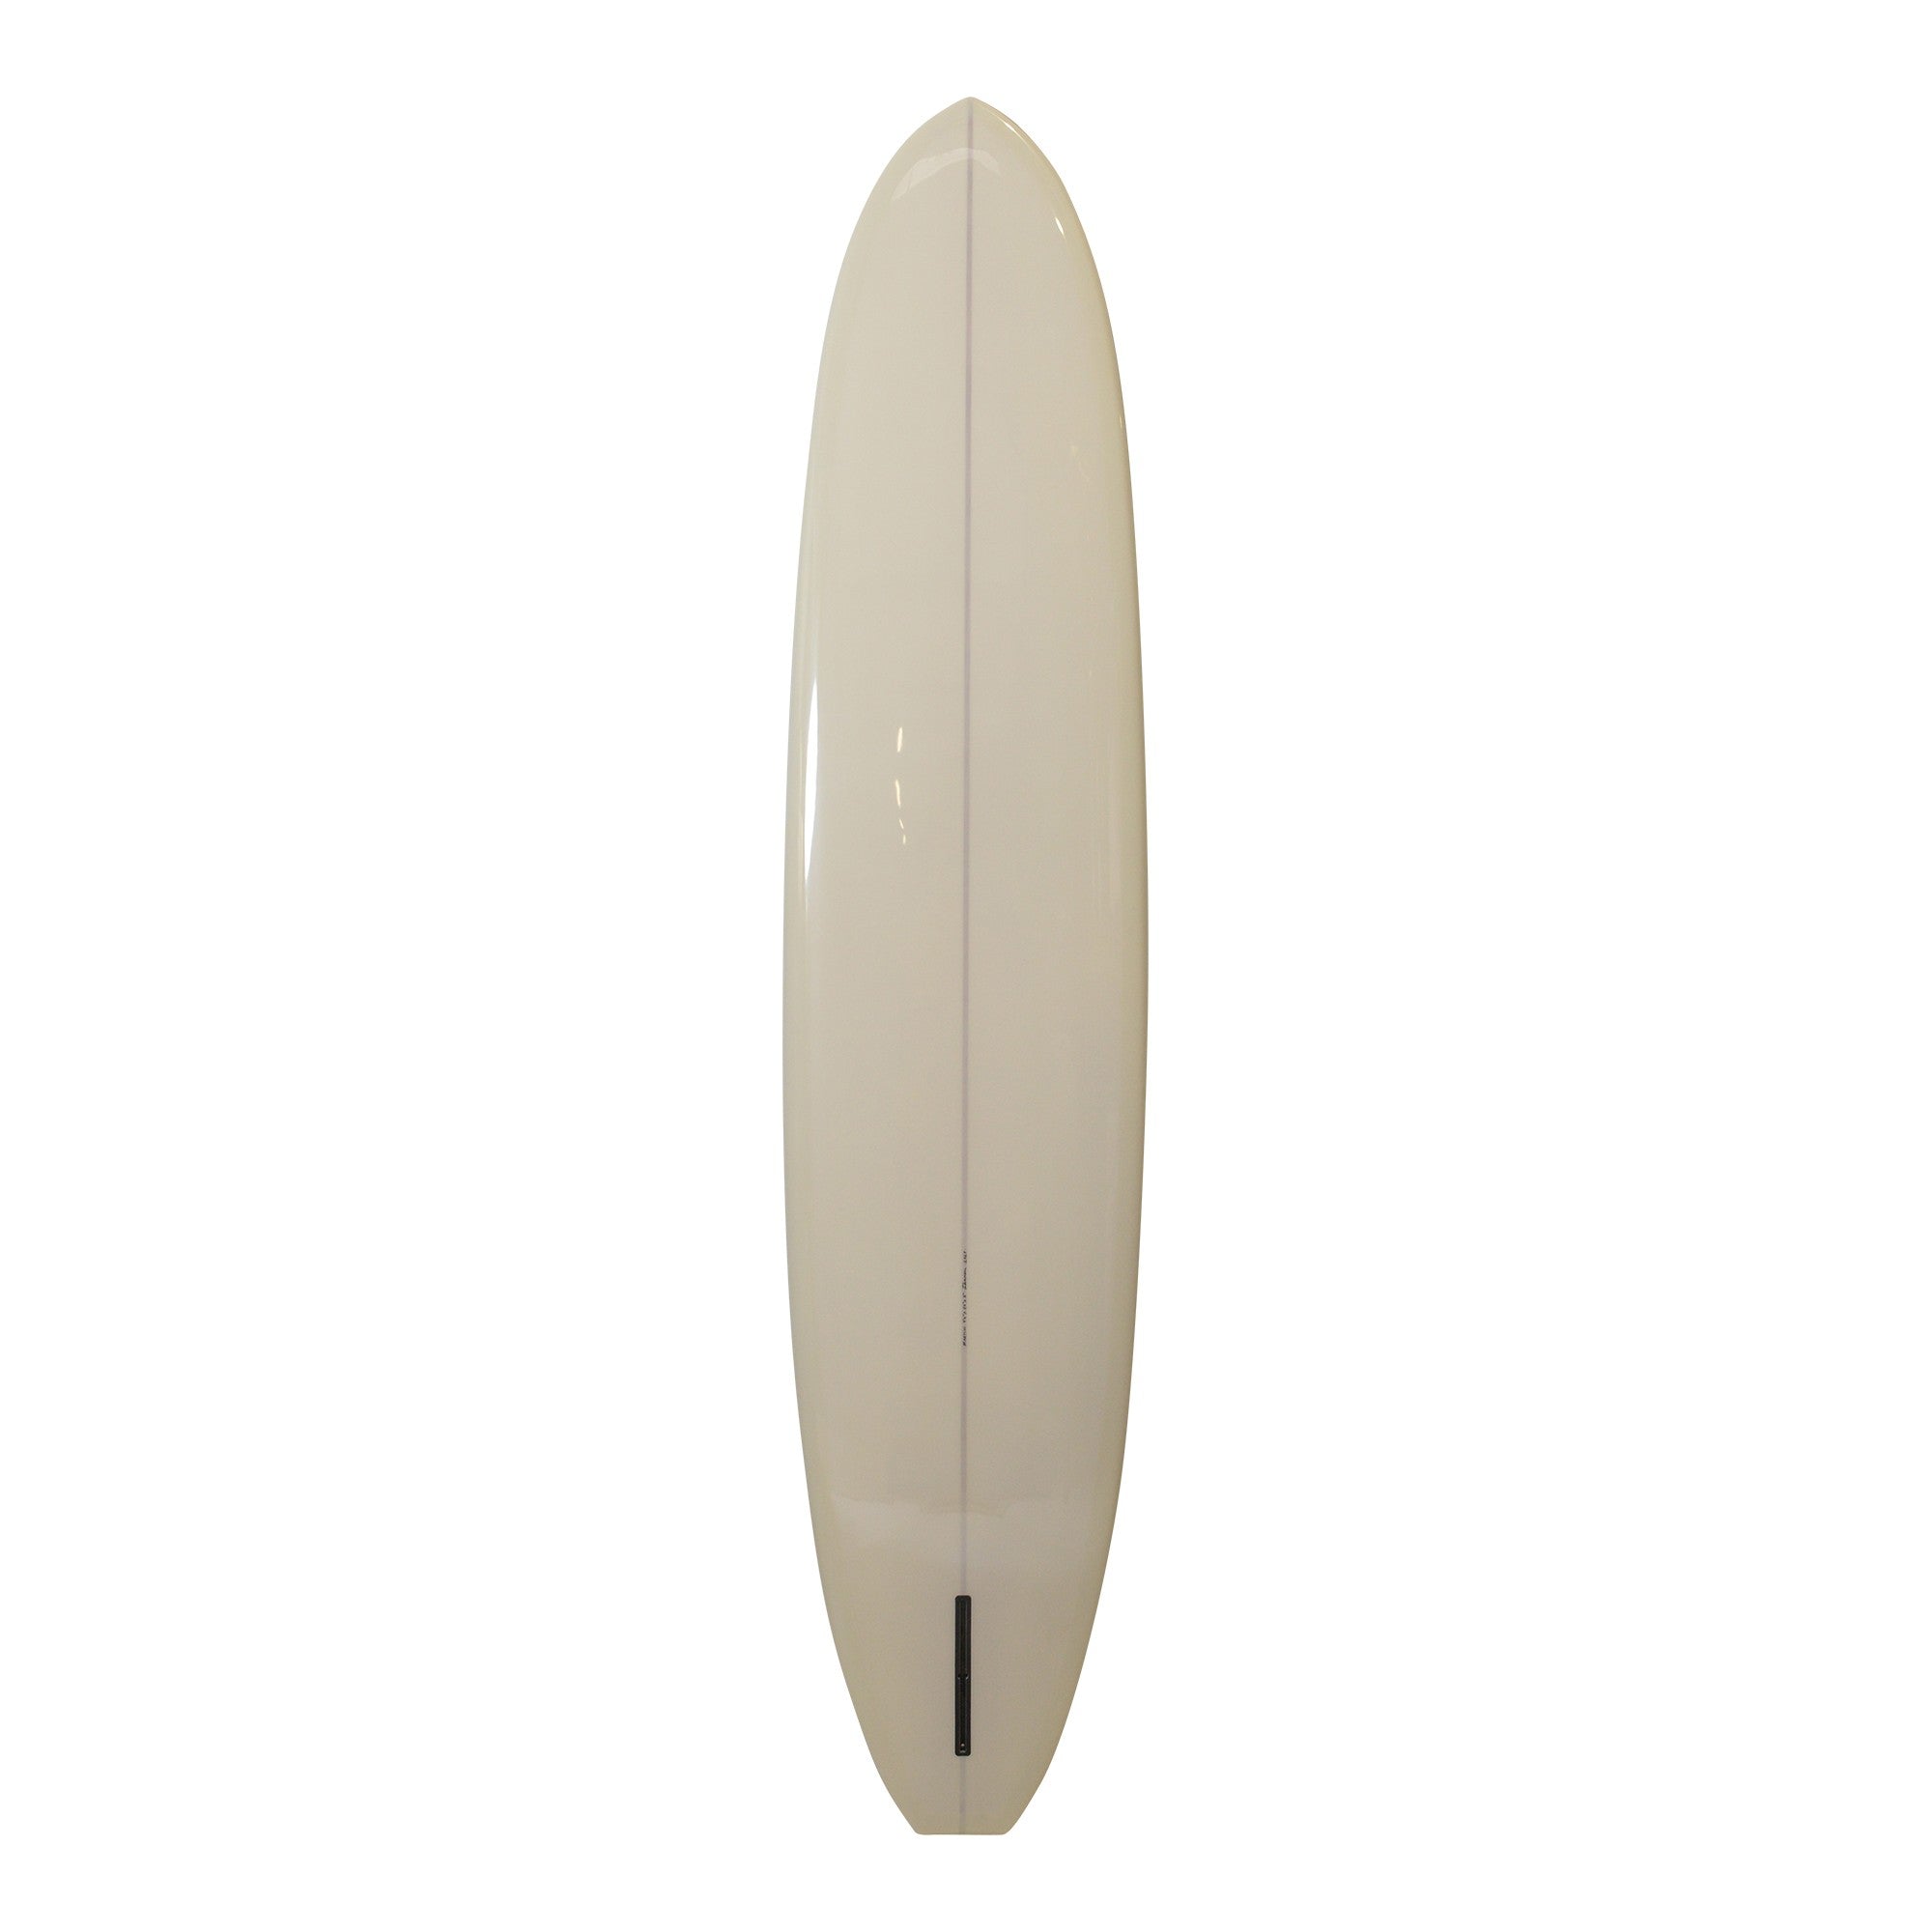 TANNER SURFBOARDS - Martini Longboard - 9'4 (PU) - Cream